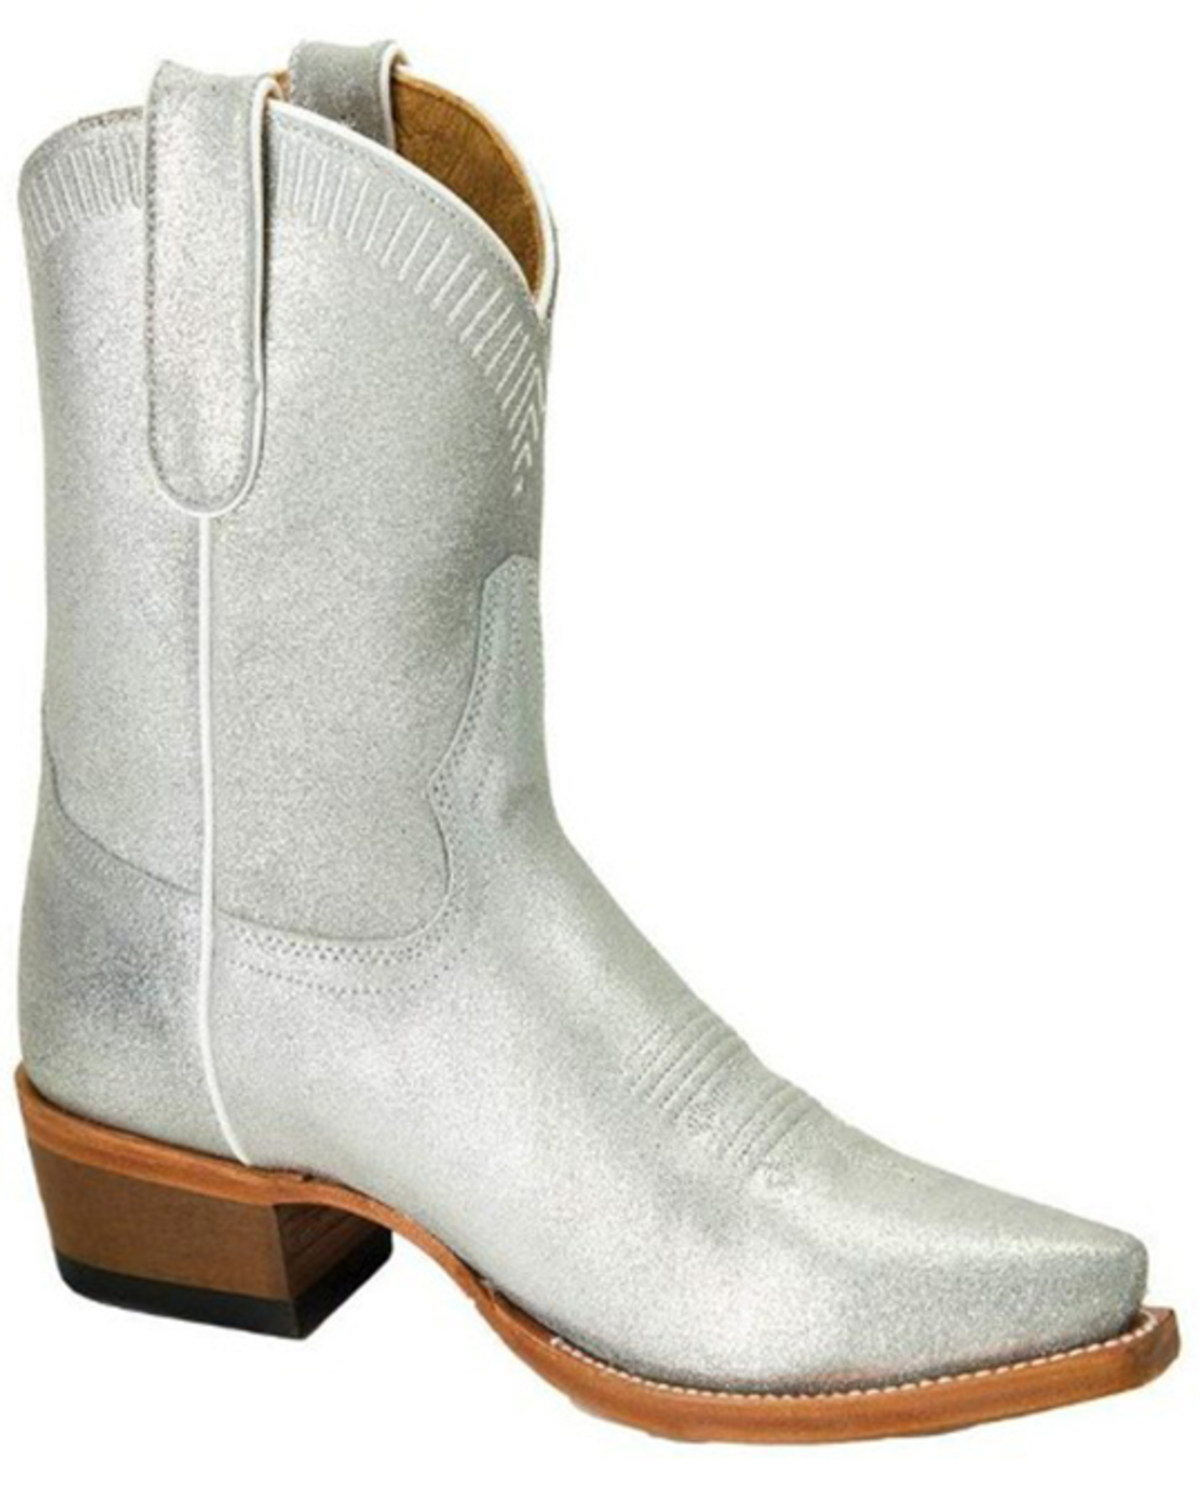 Macie Bean Women's Hey O Western Boots - Snip Toe